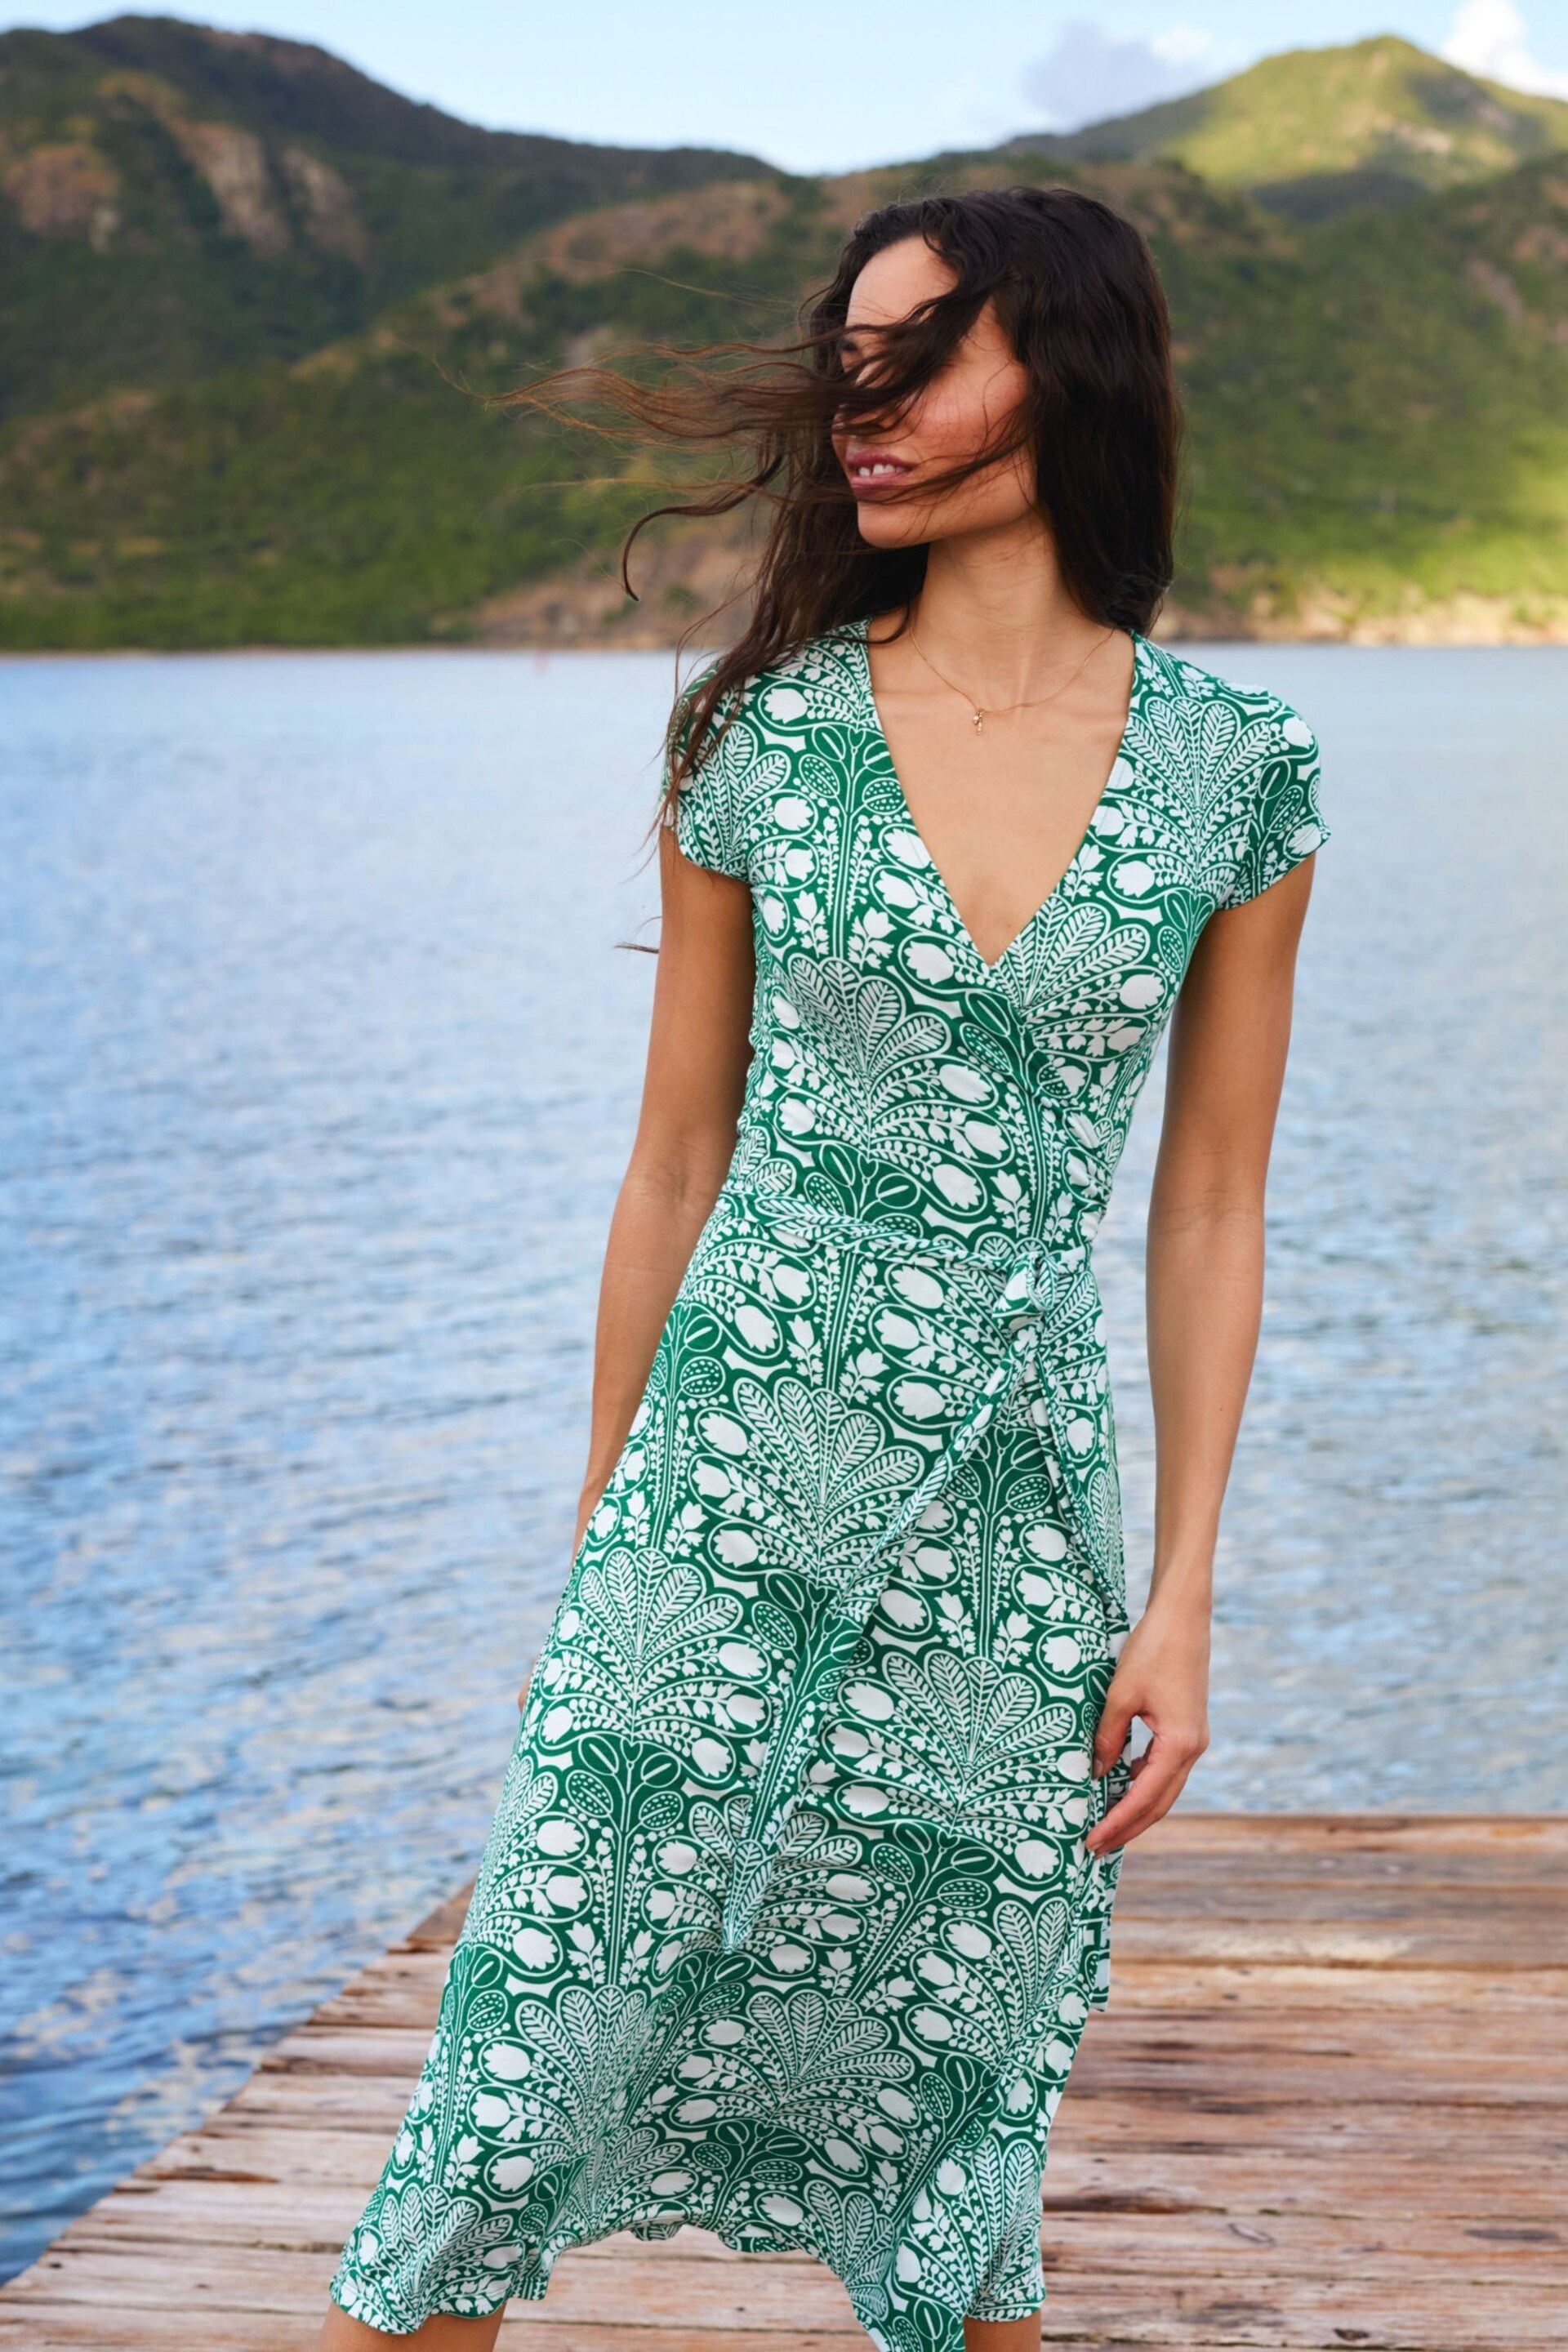 Boden Green Joanna Cap Sleeve Wrap Dress - Image 1 of 6